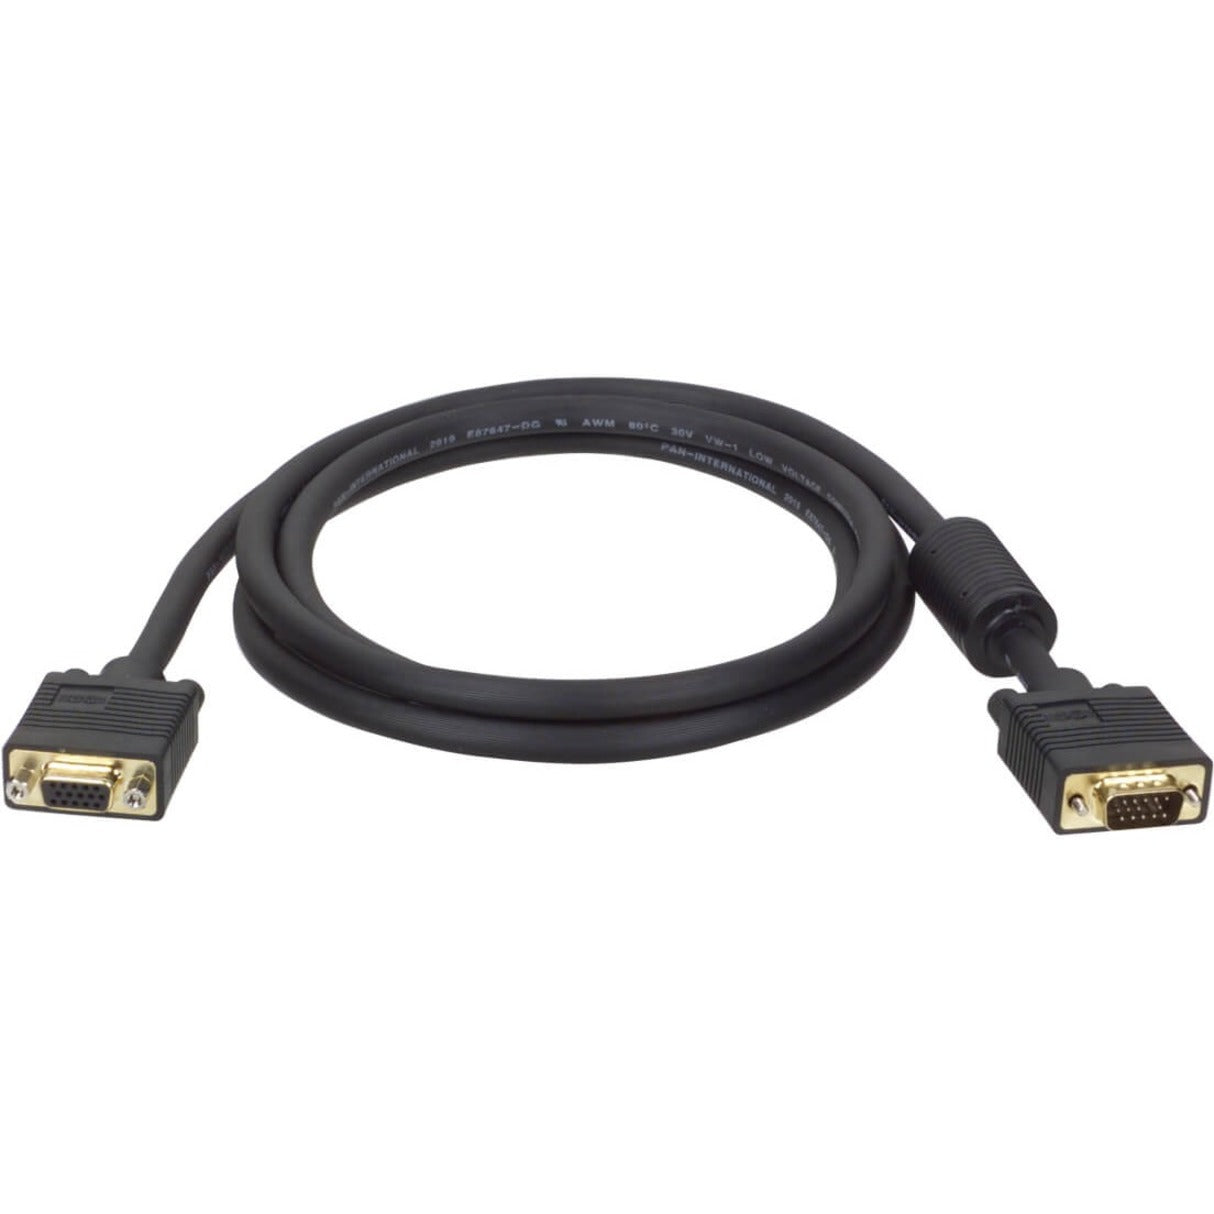 Tripp Lite P500-025 Video Extension Cable, 25-ft SVGA/VGA Monitor Extension HD15F/M Gold w/ RGB Coax